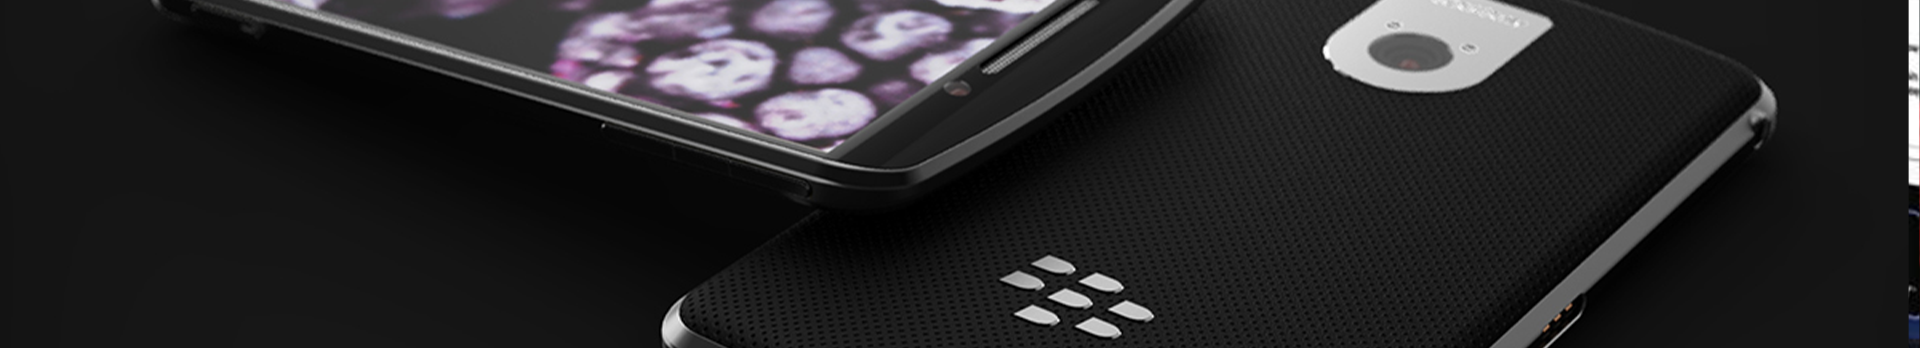 blackberry mobile application patna